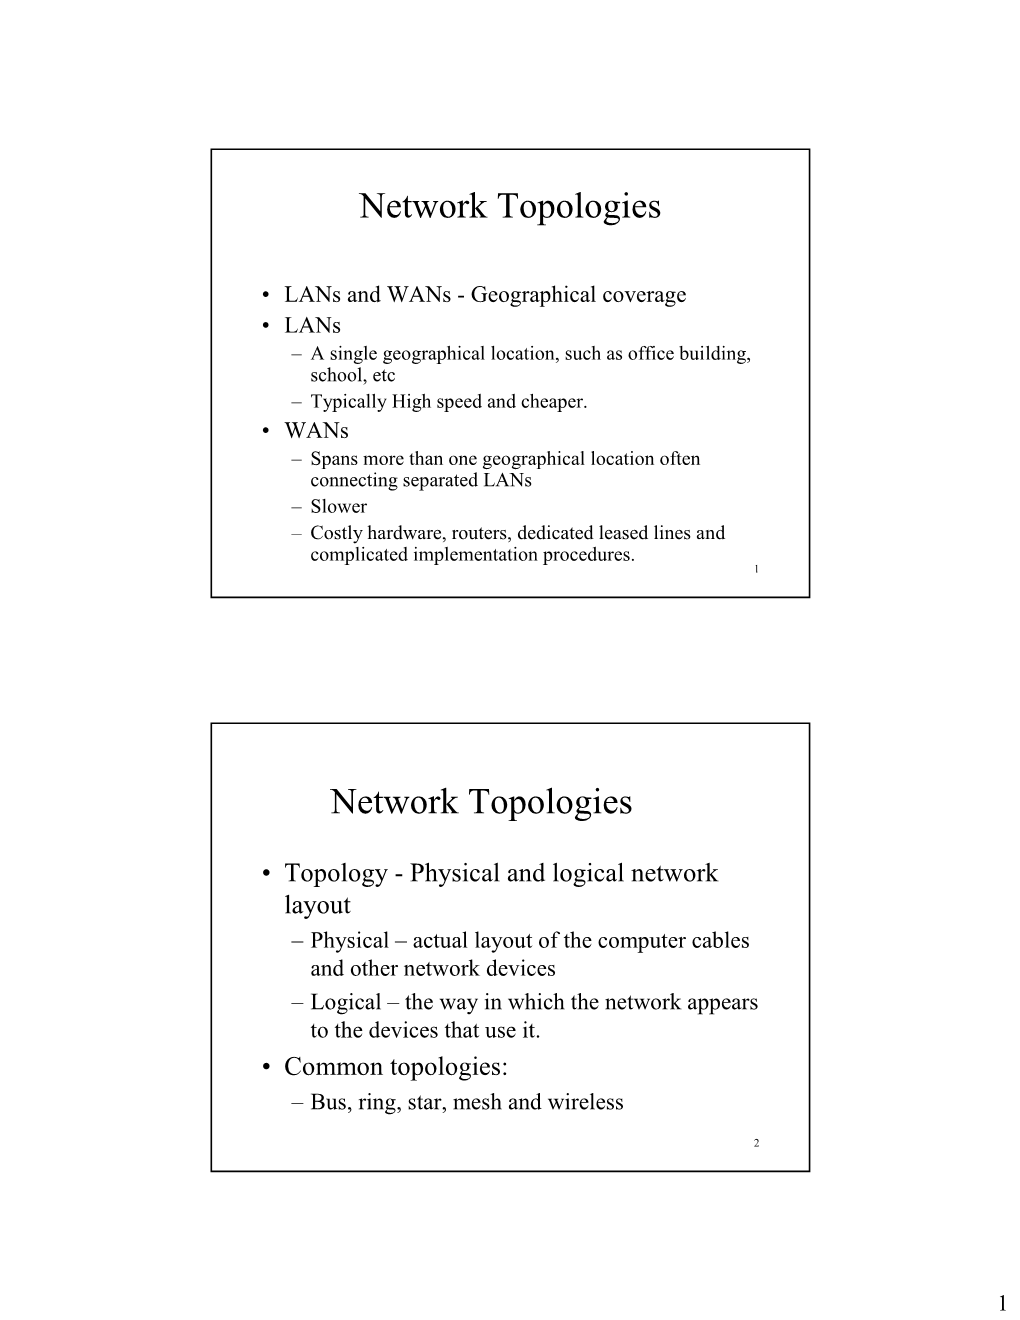 Network Topologies.Pdf